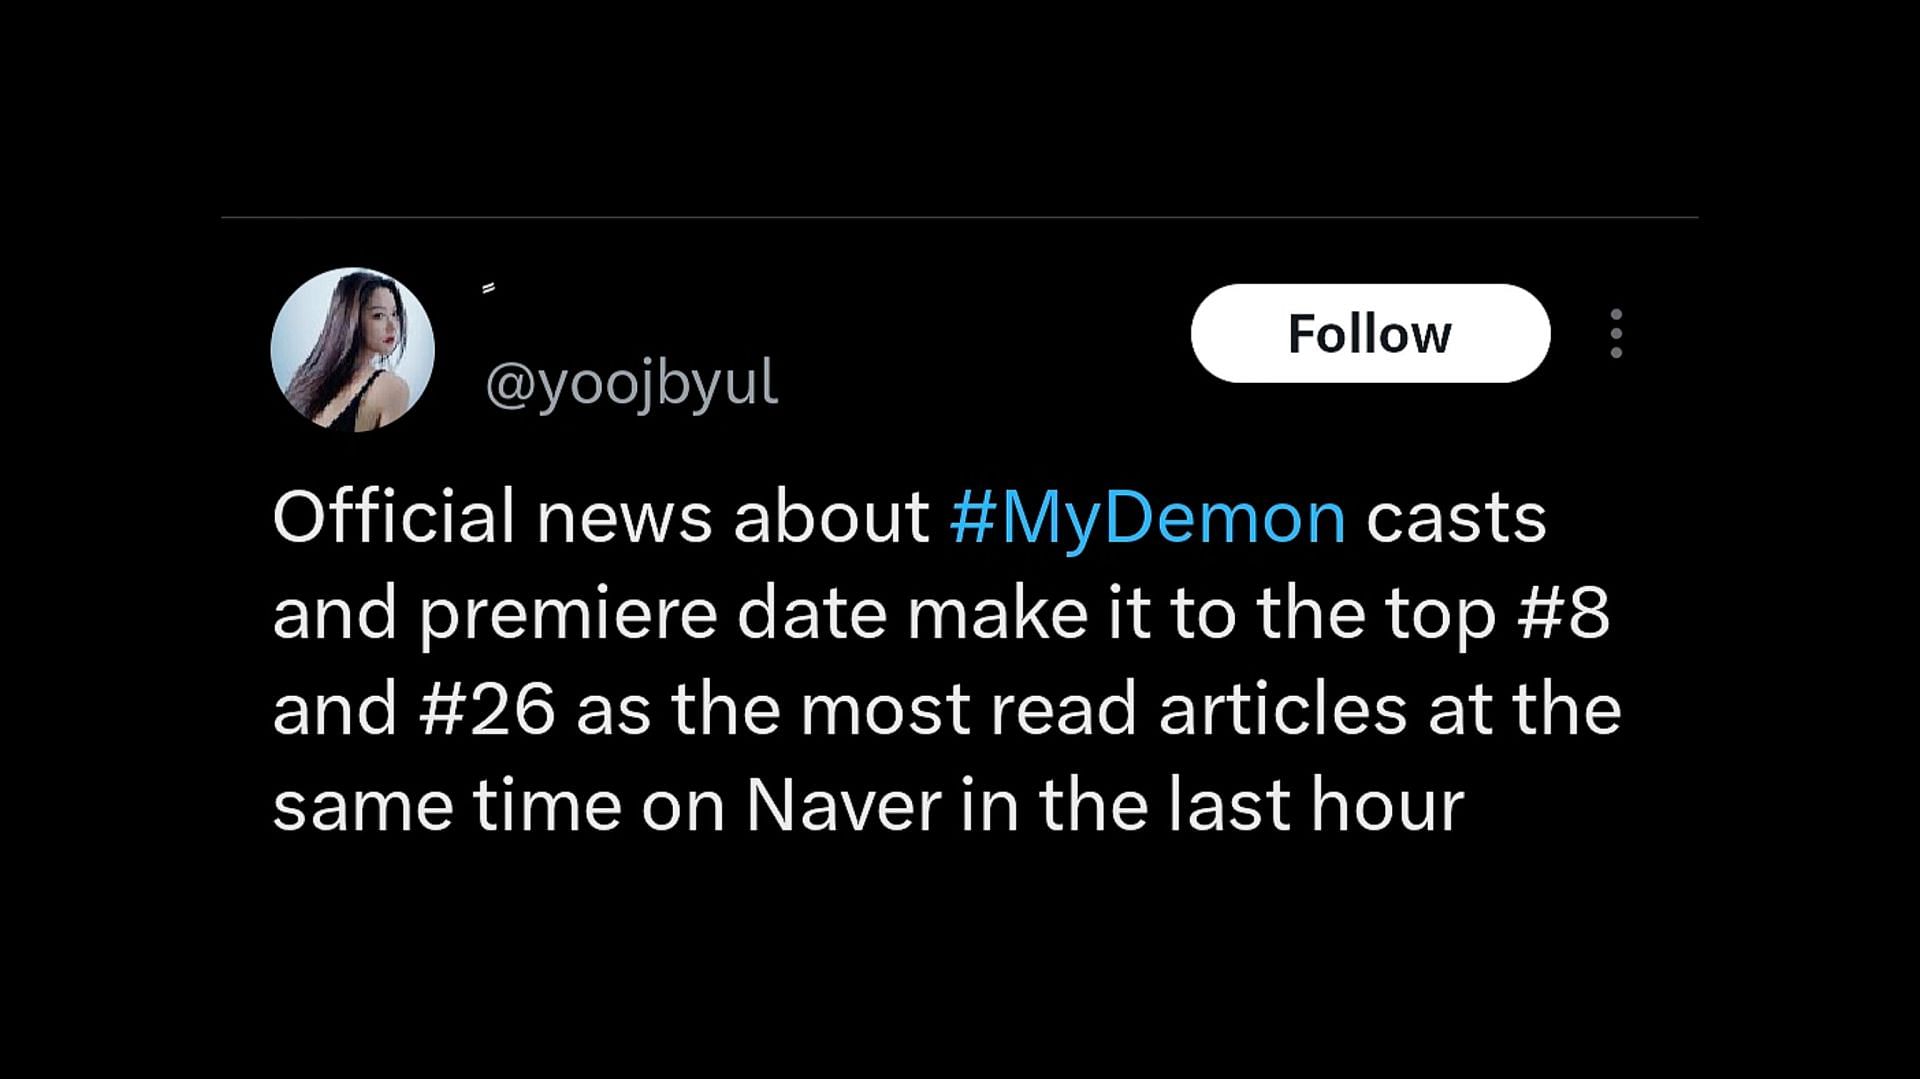 Fans react as SBS confirms My Demon release date (Image via X)